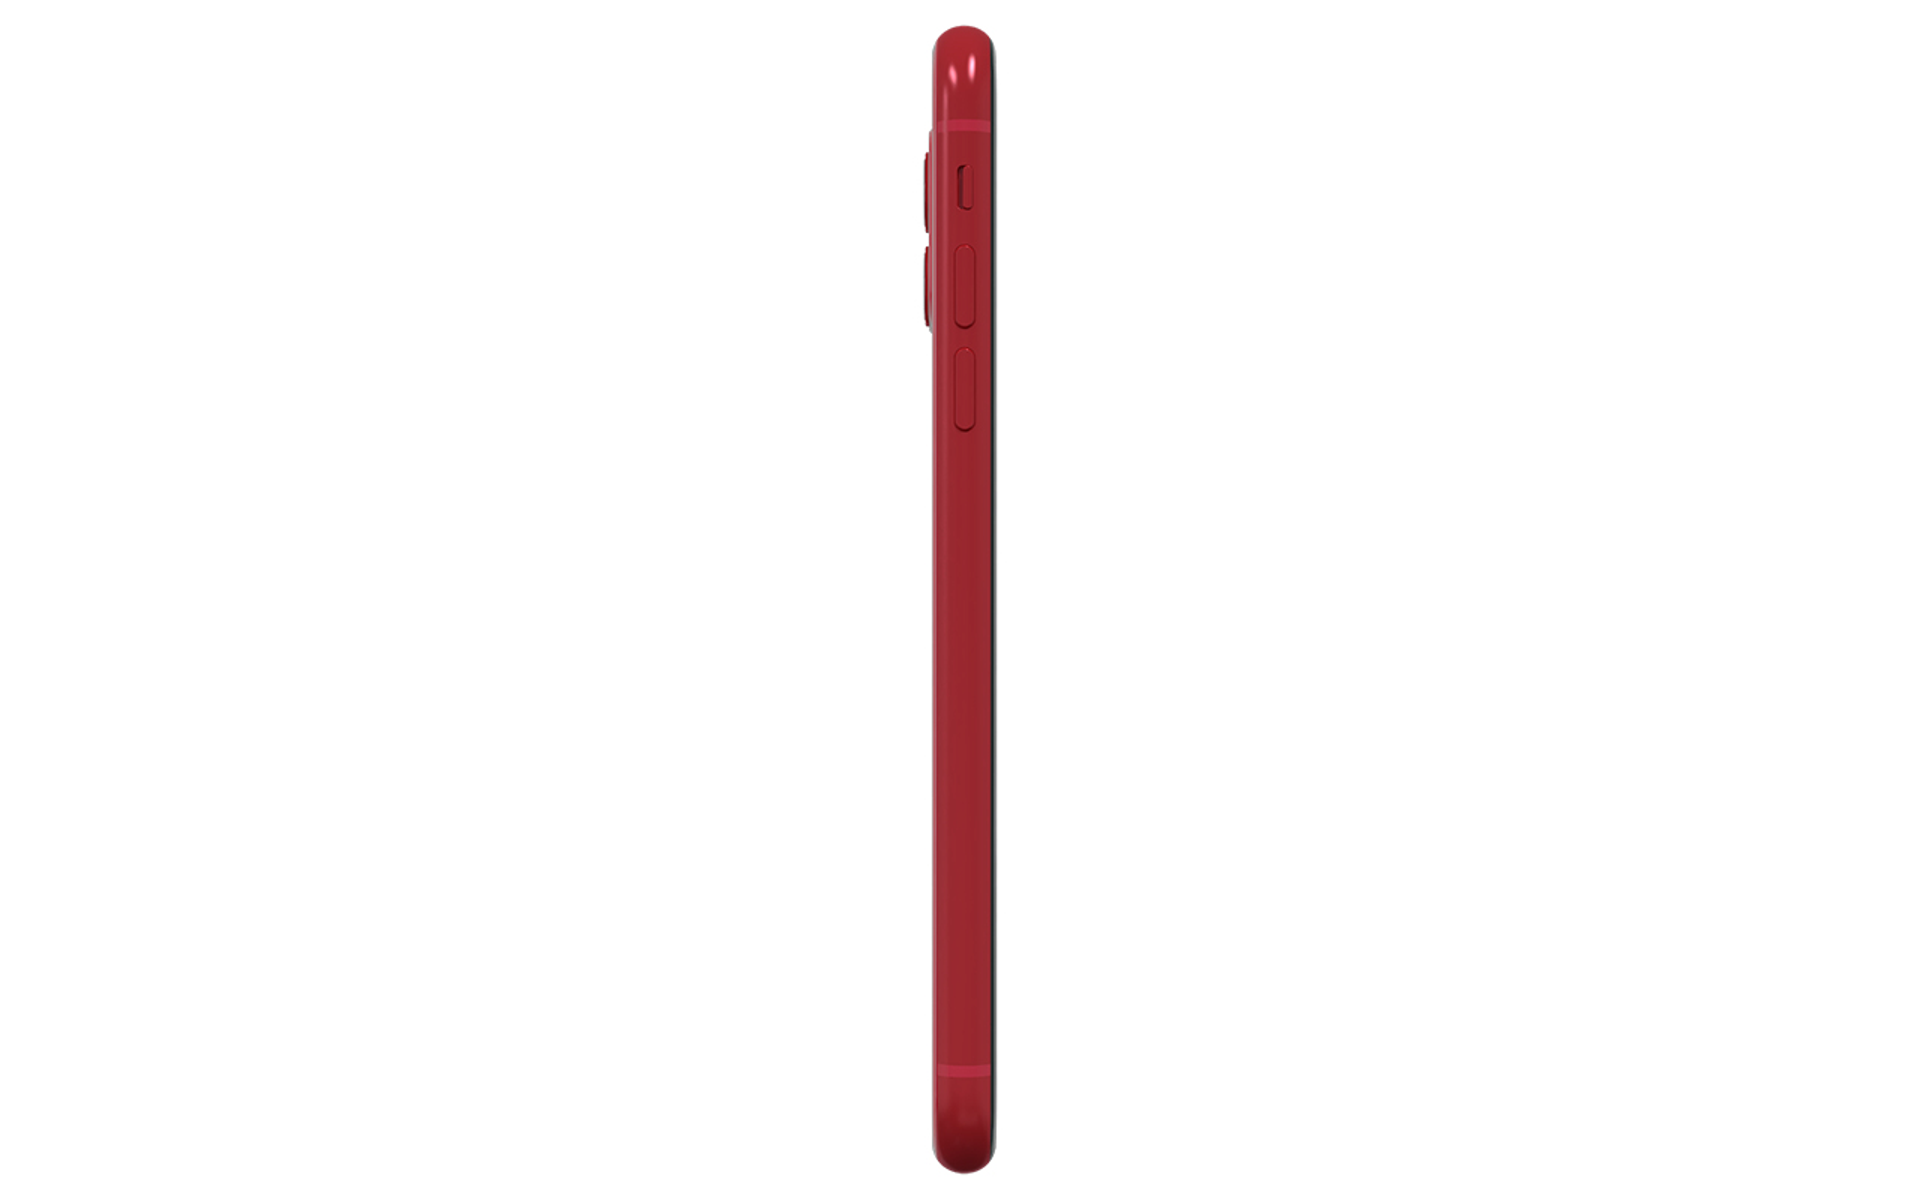 11 Red REFURBISHED(*) GB iPhone 64 Dual APPLE SIM